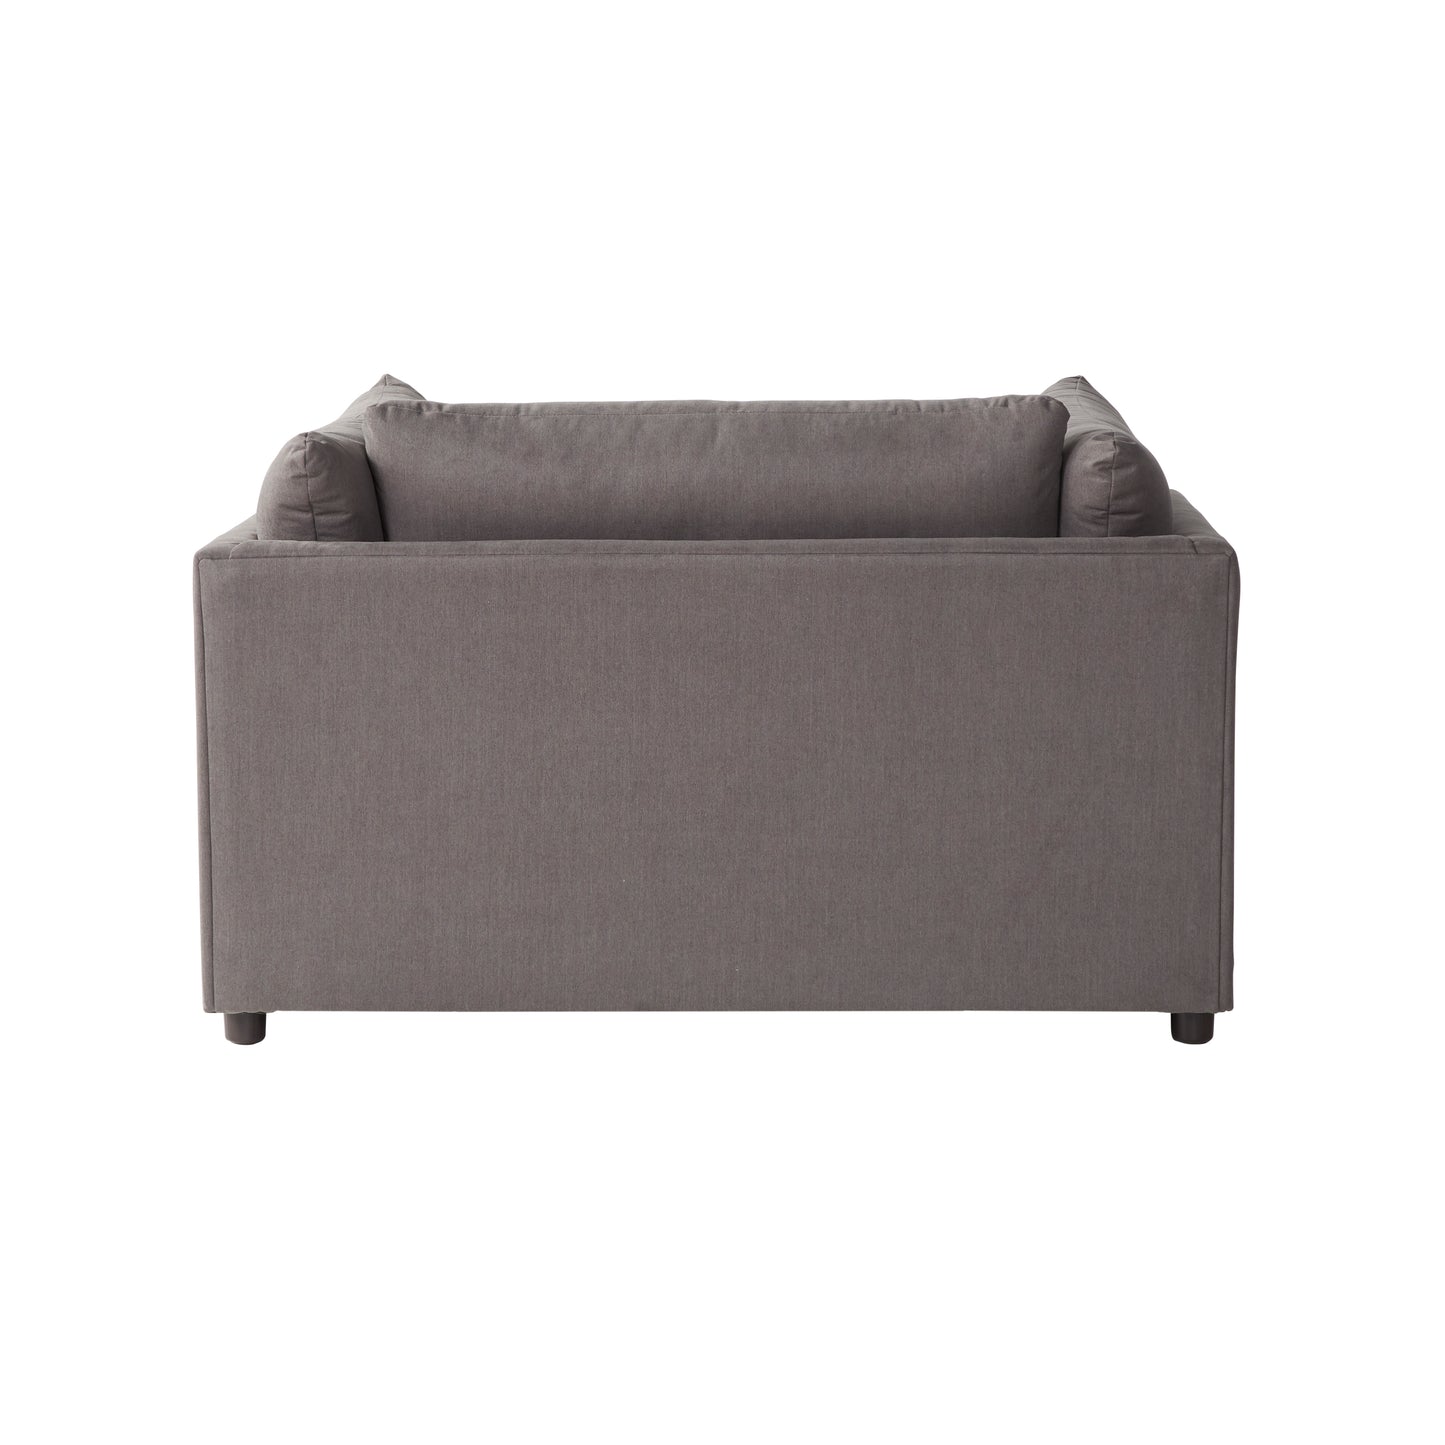 Roundhill Furniture Enda Oversized Living Room Pillow Back Cuddler Arm Chair, Carbon Gray